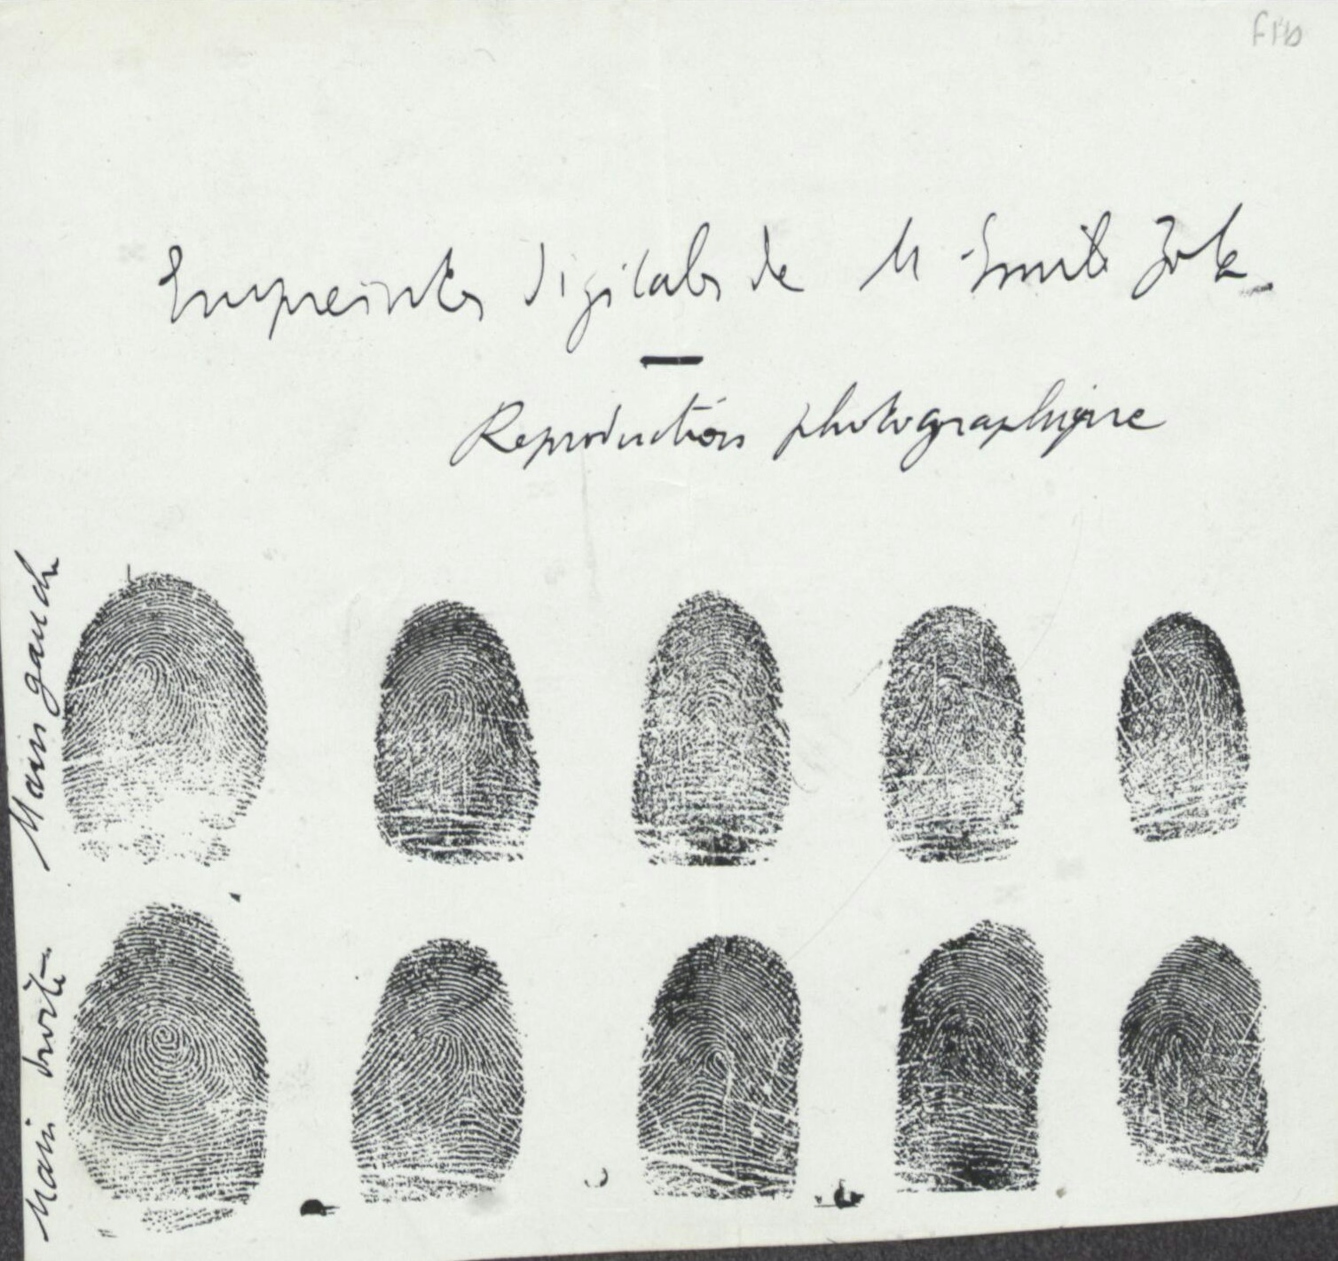 Black and white image showing Emile Zola’s fingerprints.